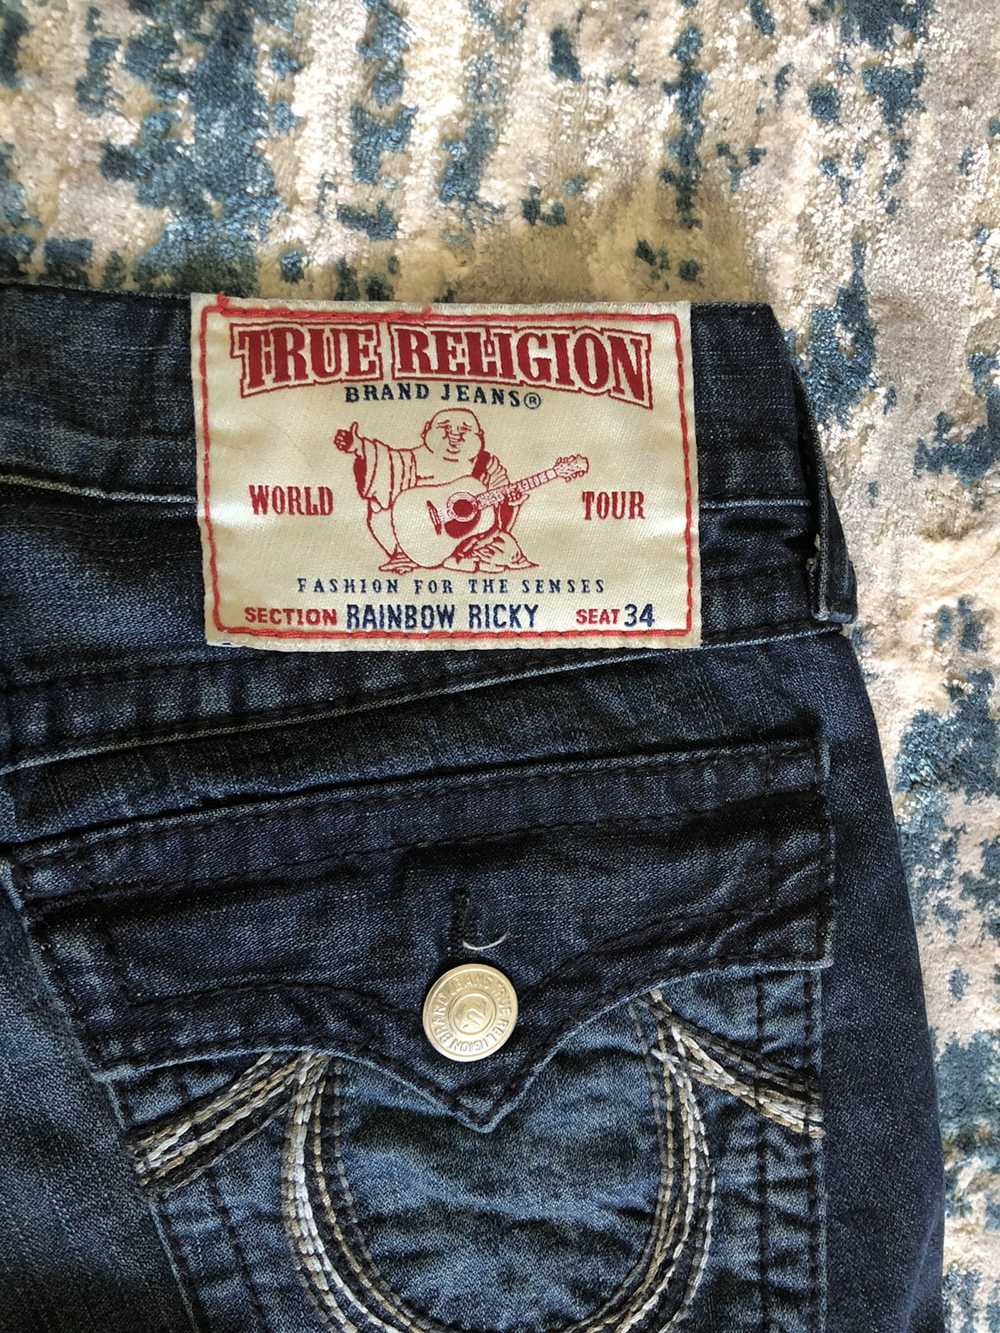 True Religion True Religion - image 3